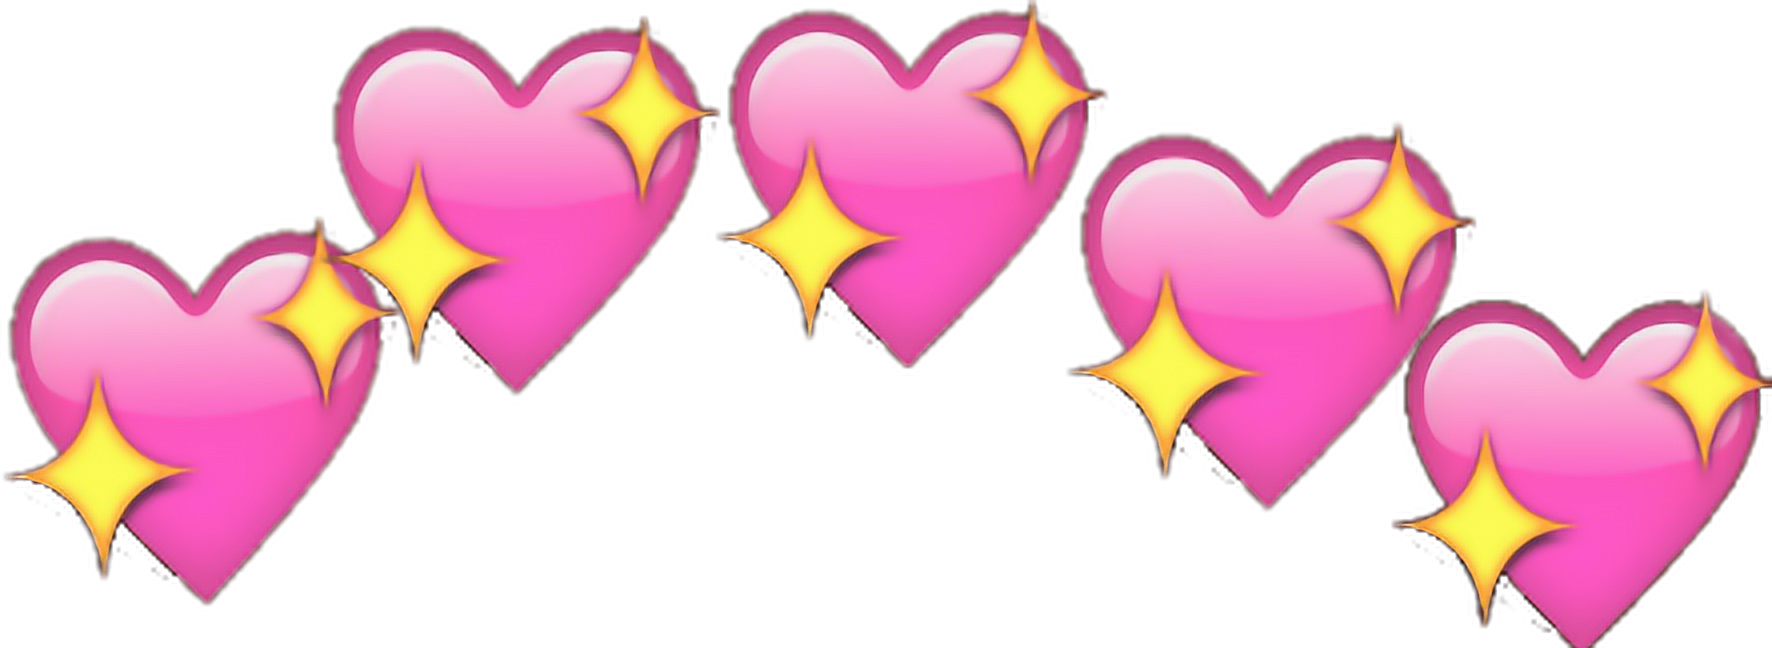 Heart Emojis Background PNG Image